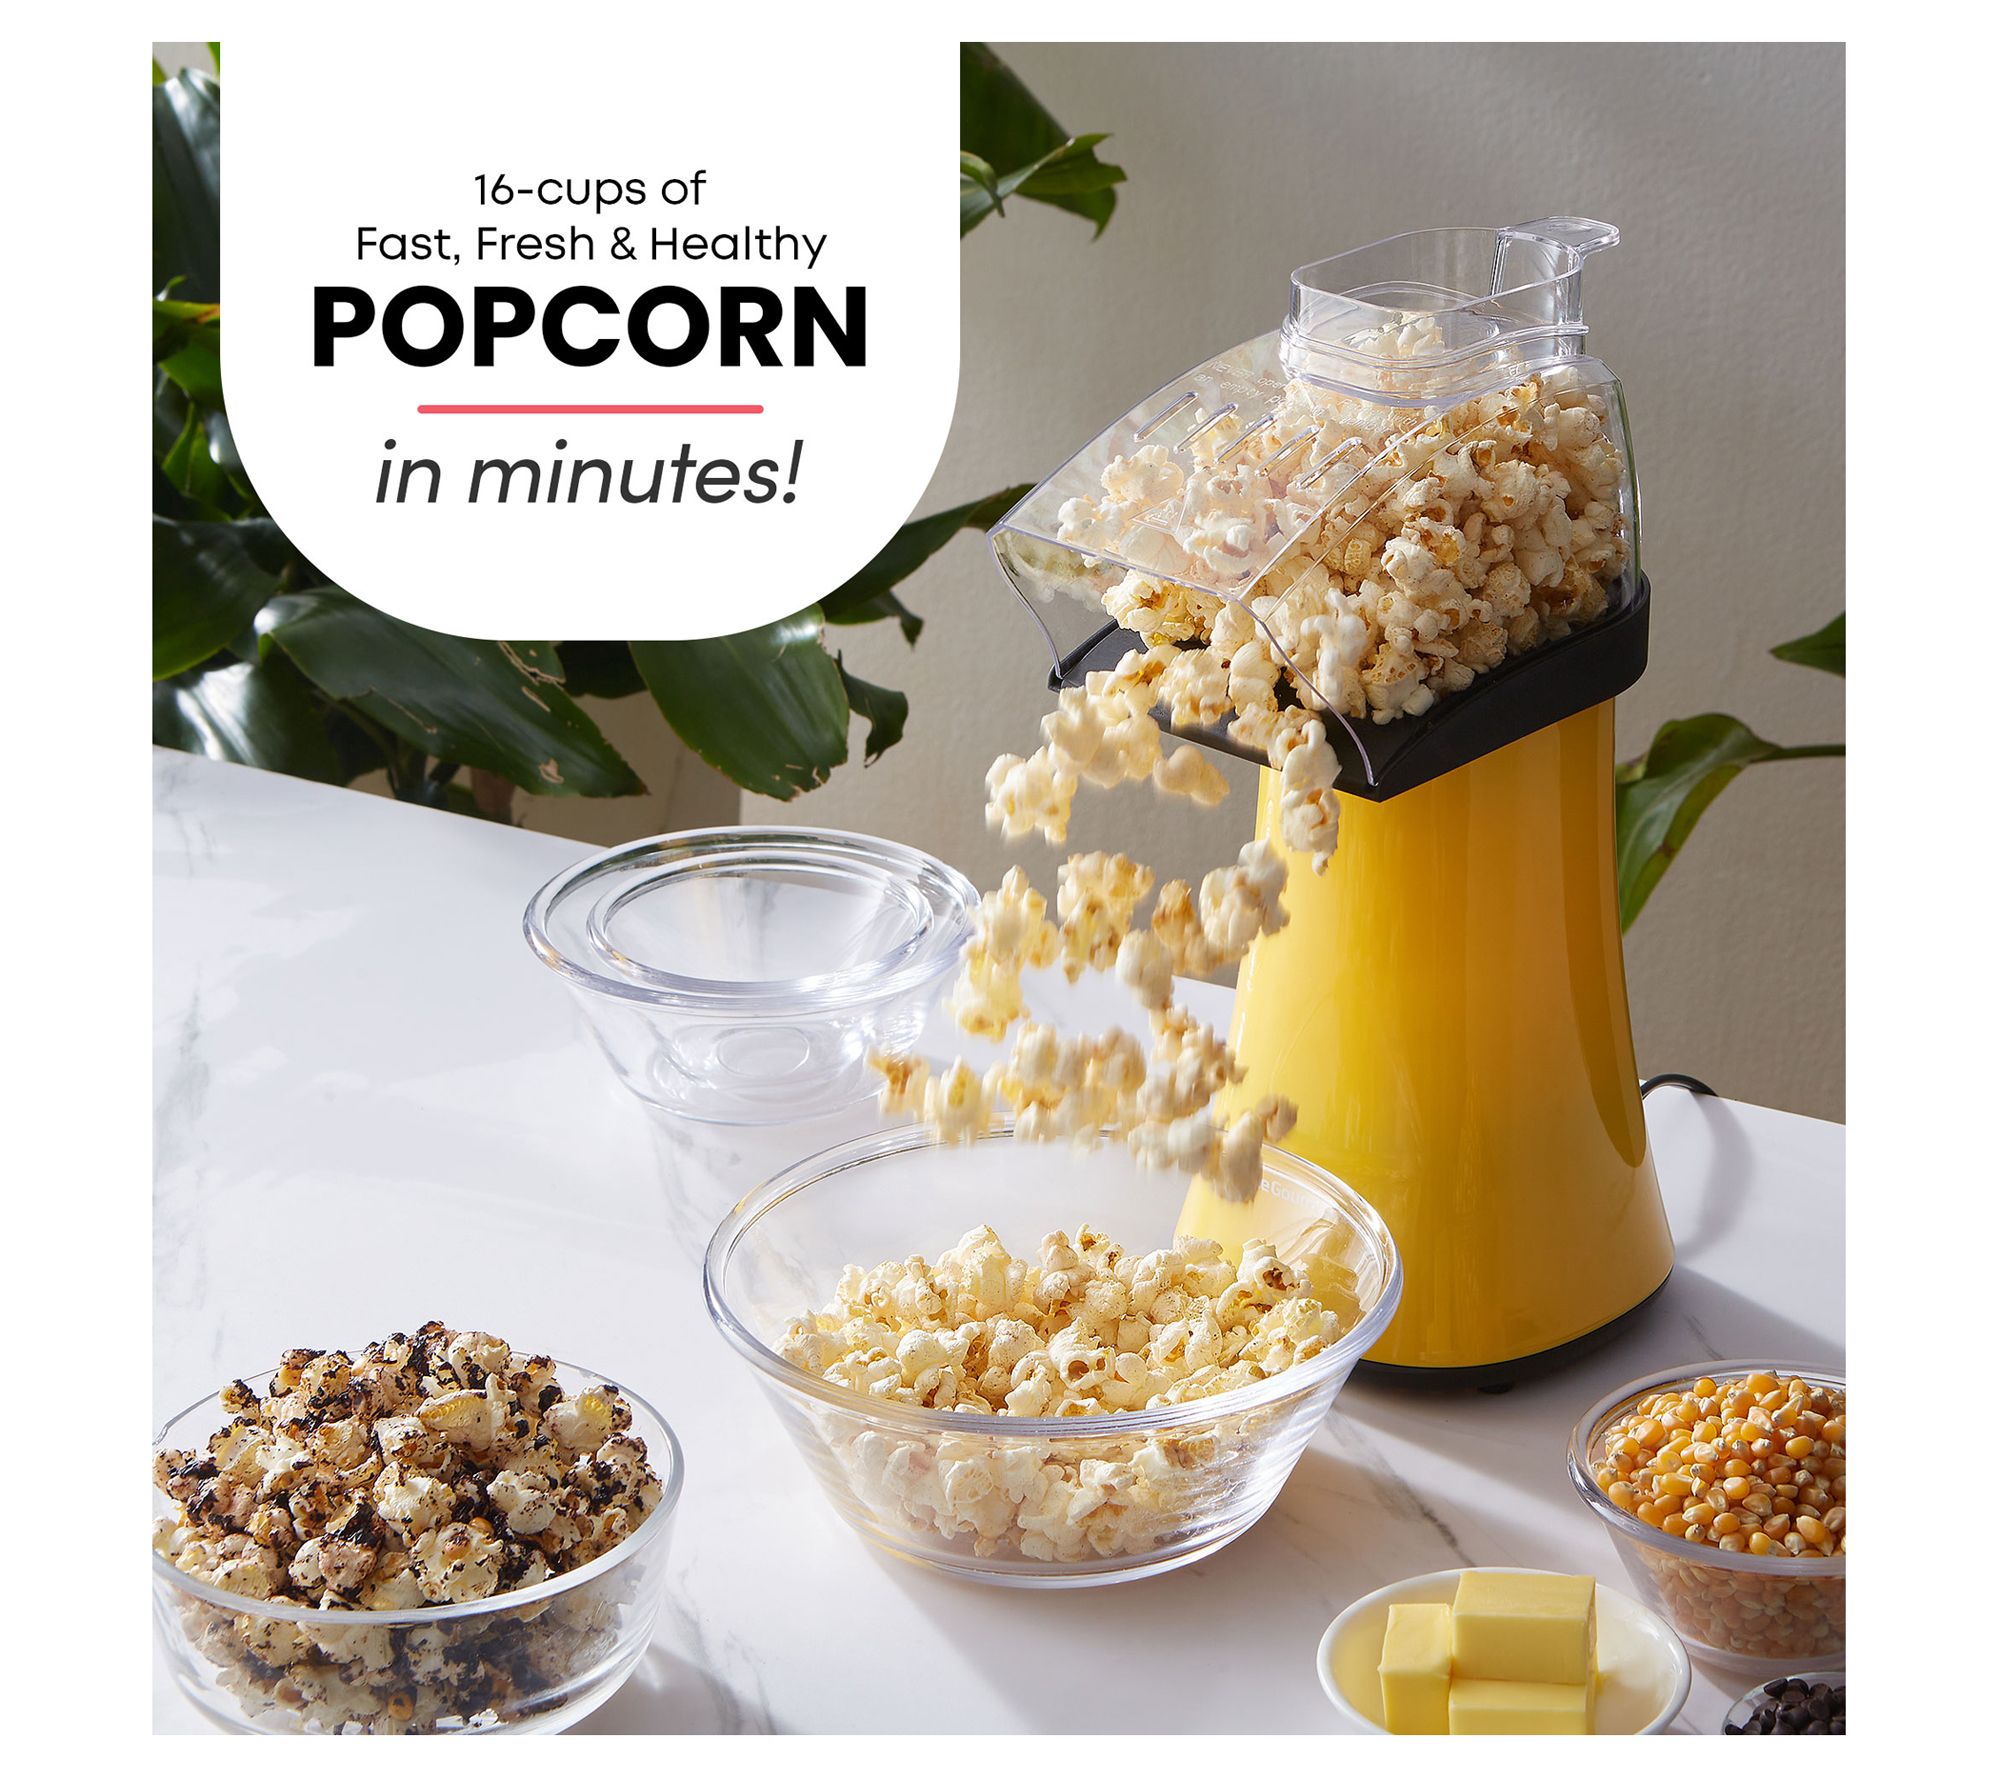 Presto PopLite Hot Air Popcorn Popper - ONLINE ONLY